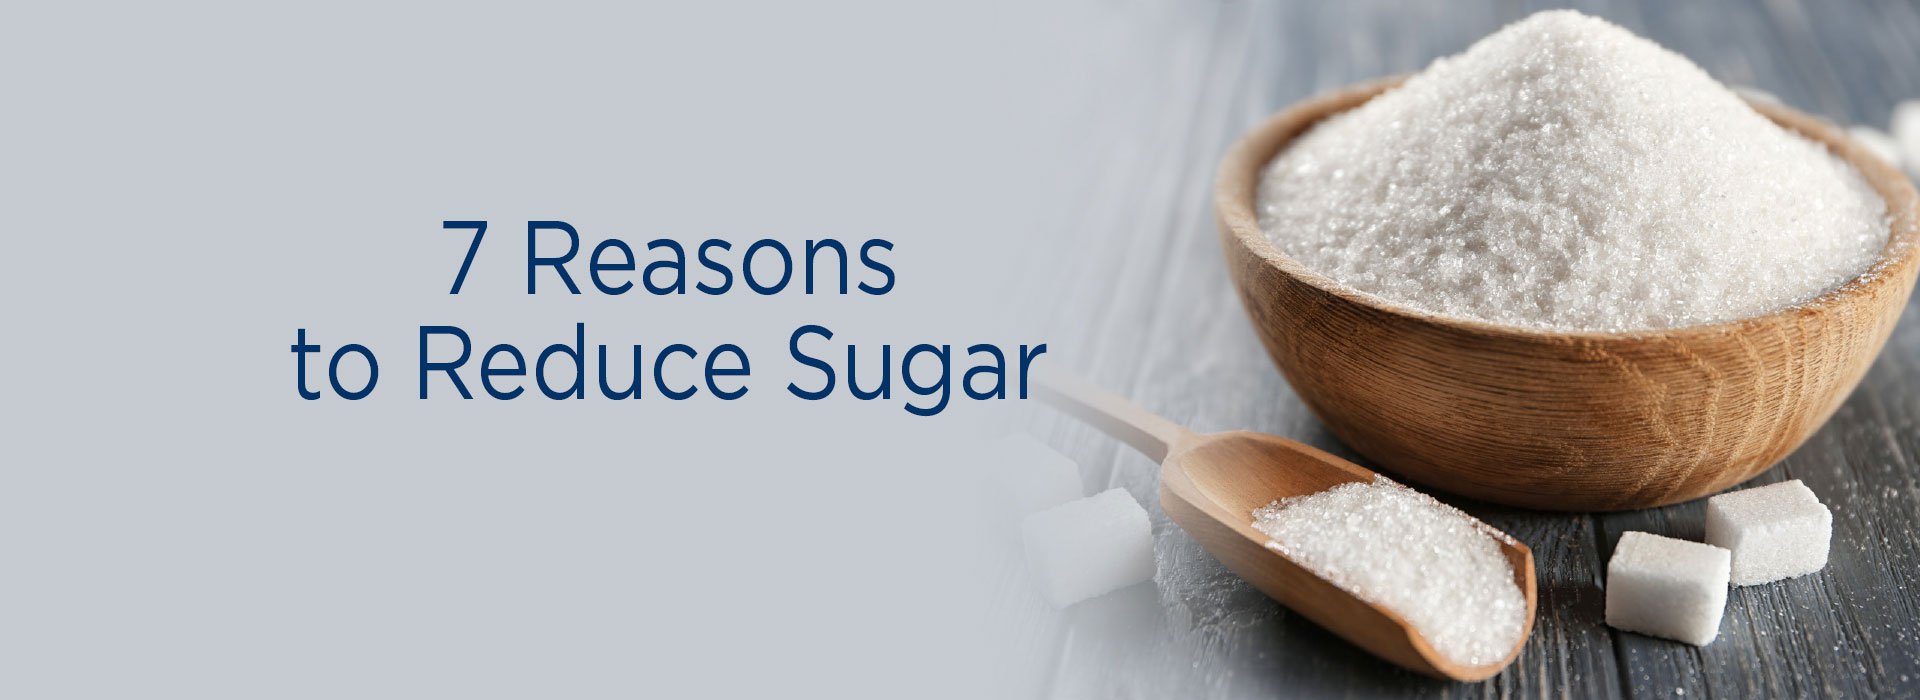 New Image International:7 Reasons to Reduce Sugar